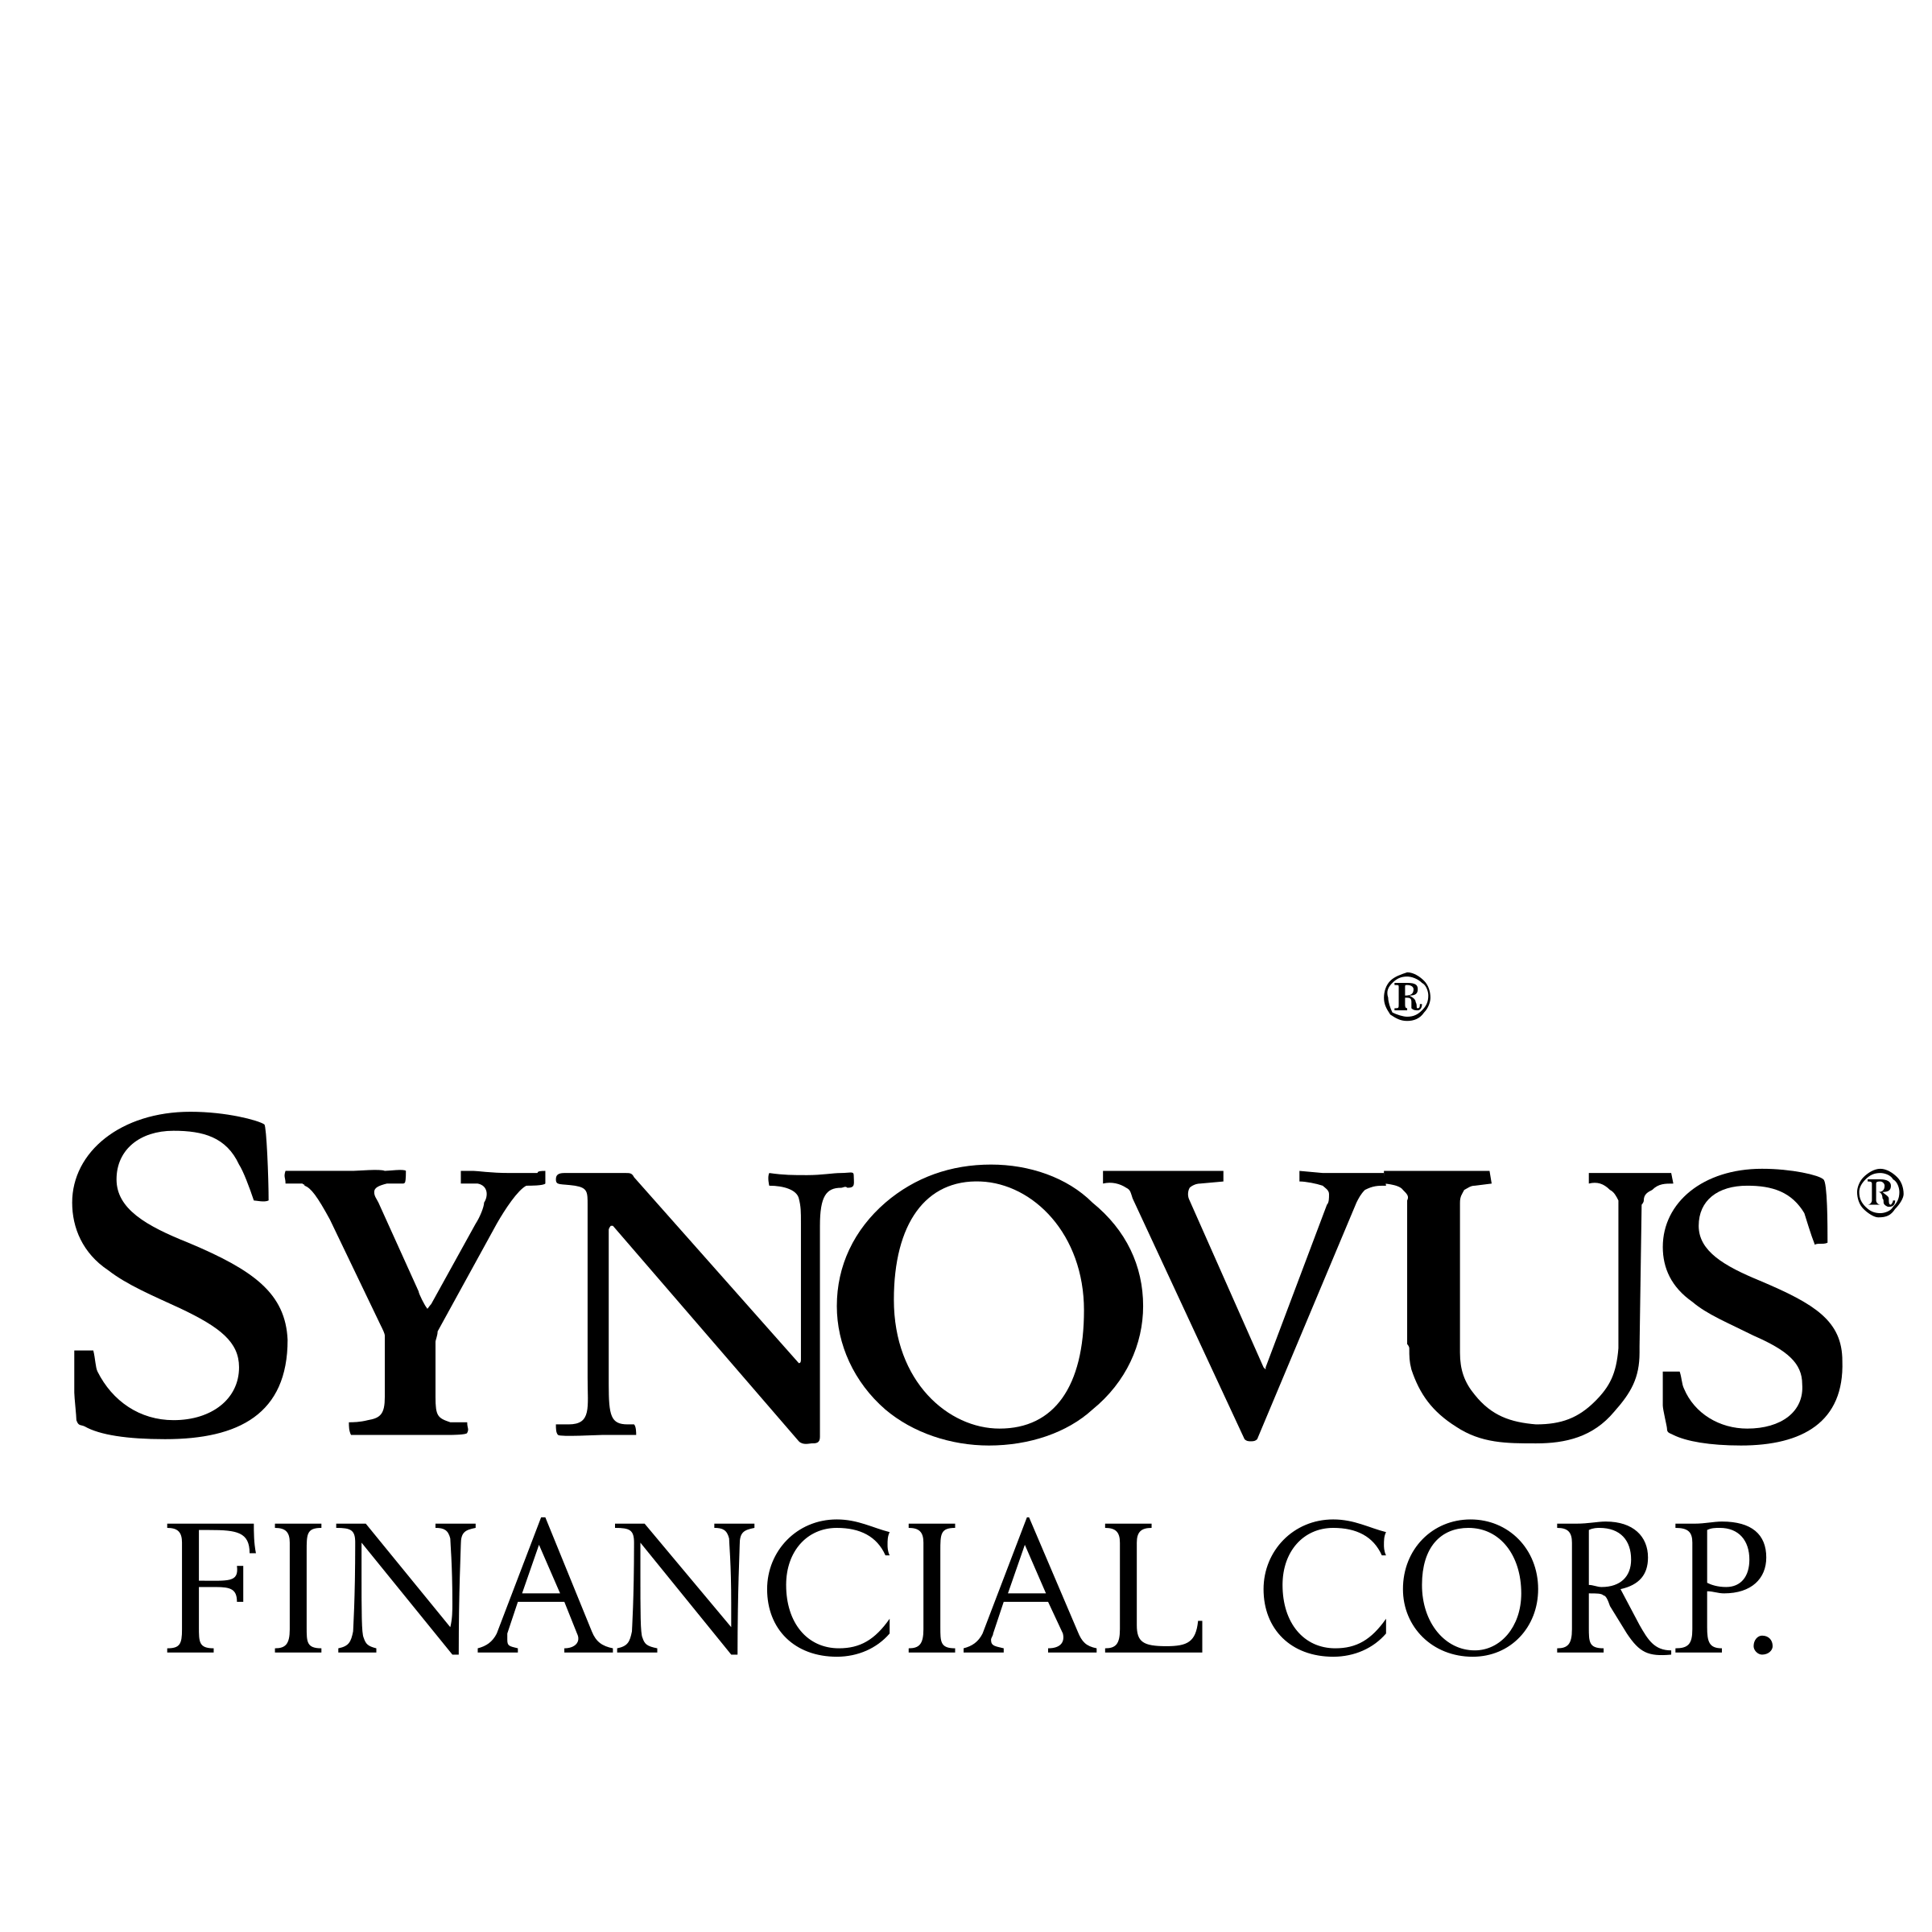 Synovus Logo - Synovus Financial Logo PNG Transparent & SVG Vector - Freebie Supply